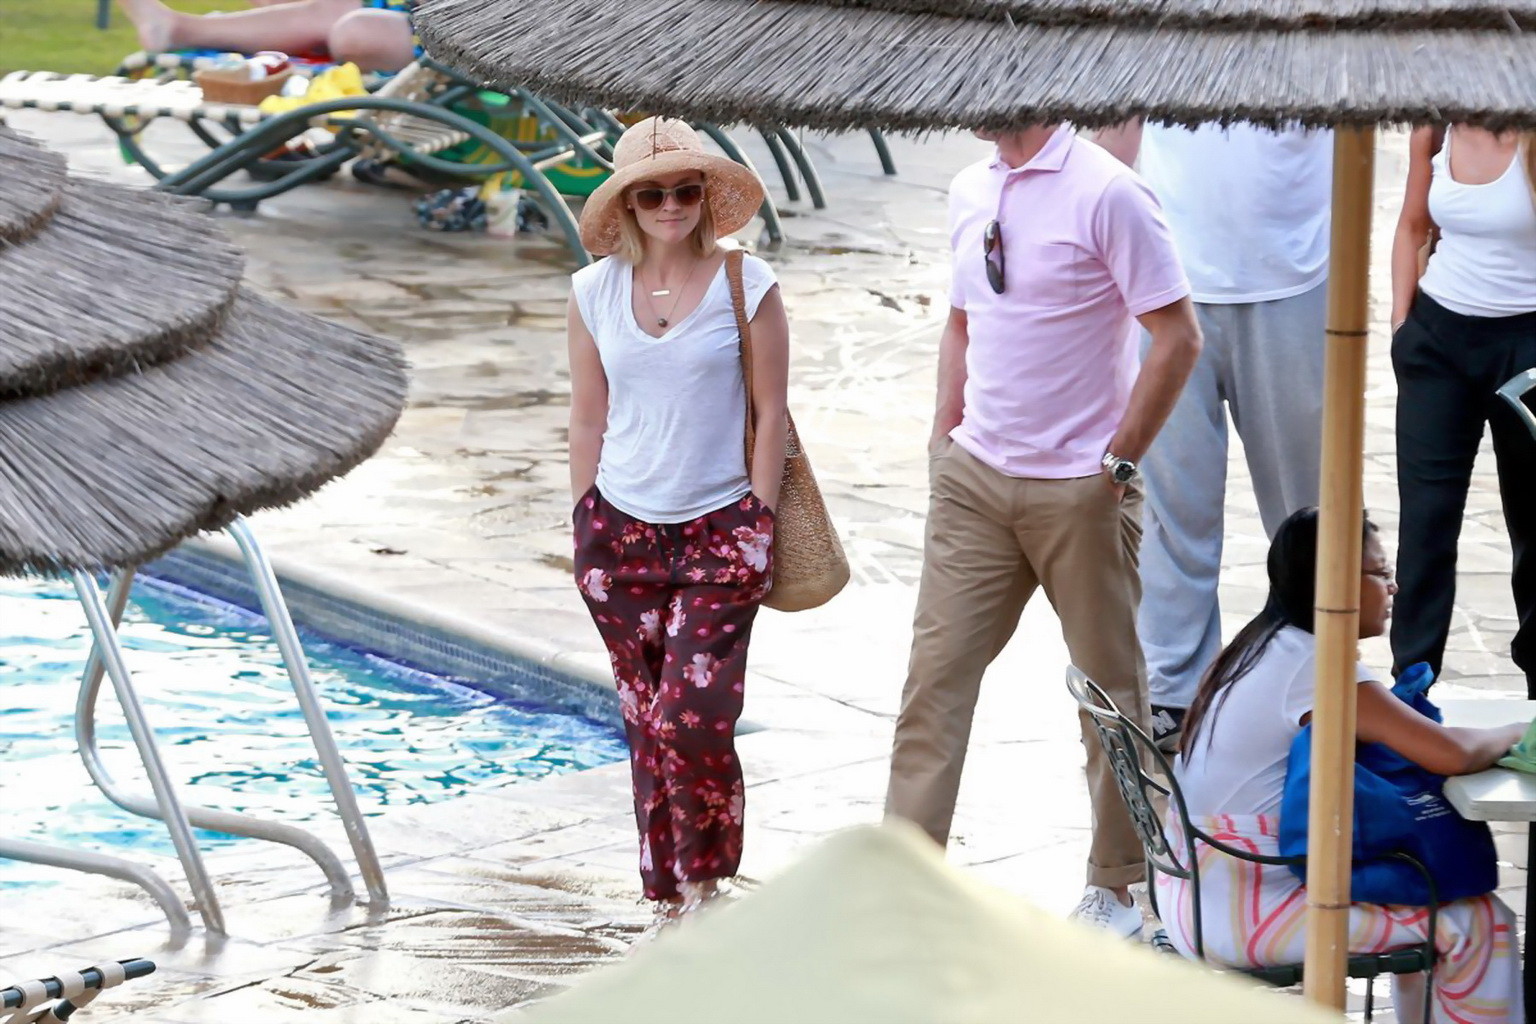 Reese witherspoon si abbronza in un succinto bikini rosa a tubo nel suo hotel alle Hawaii
 #75208039